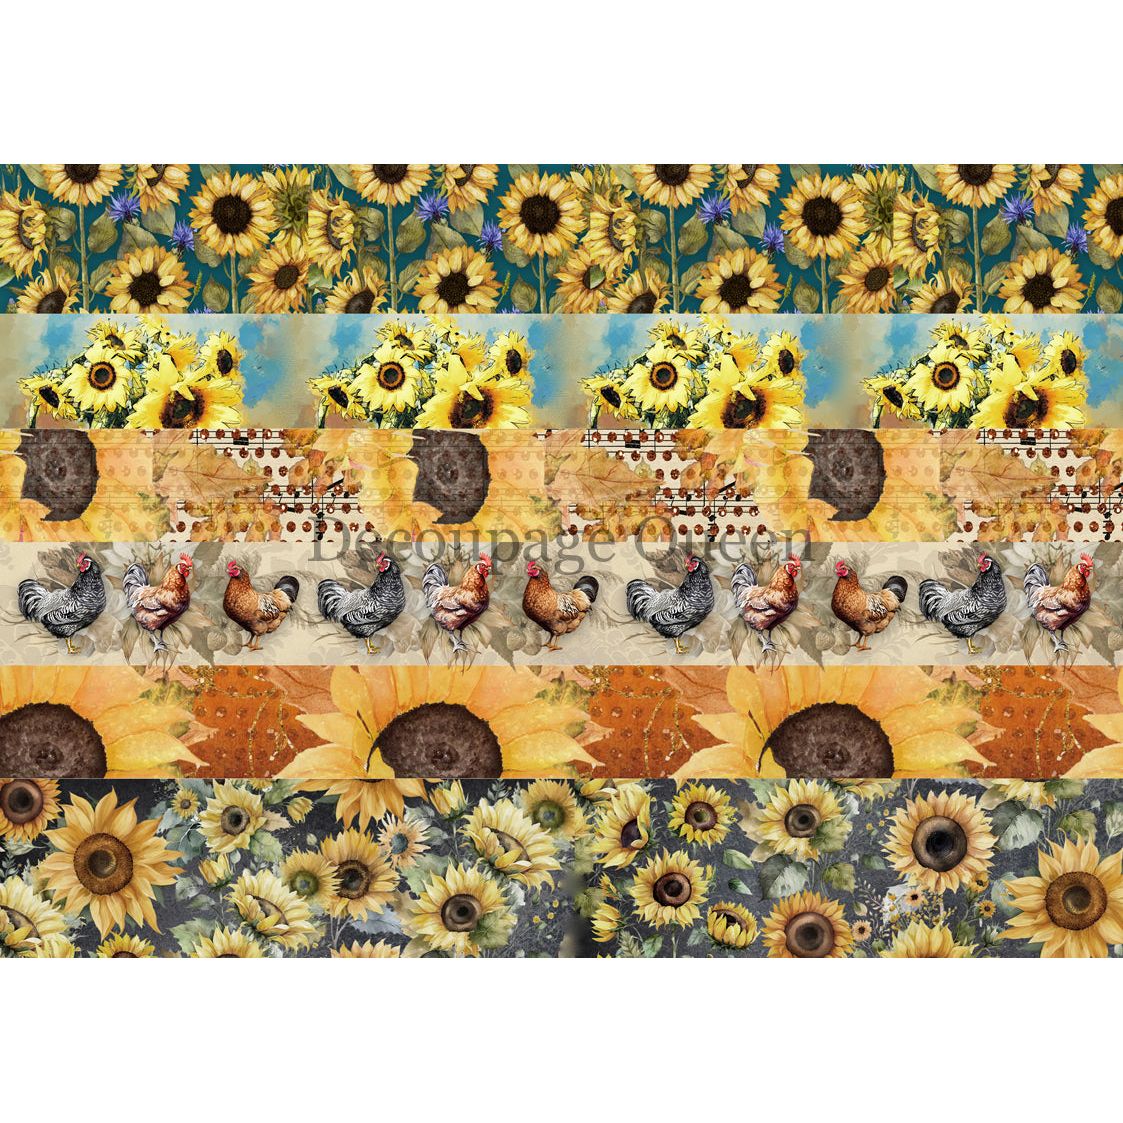 Decoupage Queen Sunflower Ephemeral Journal Kit